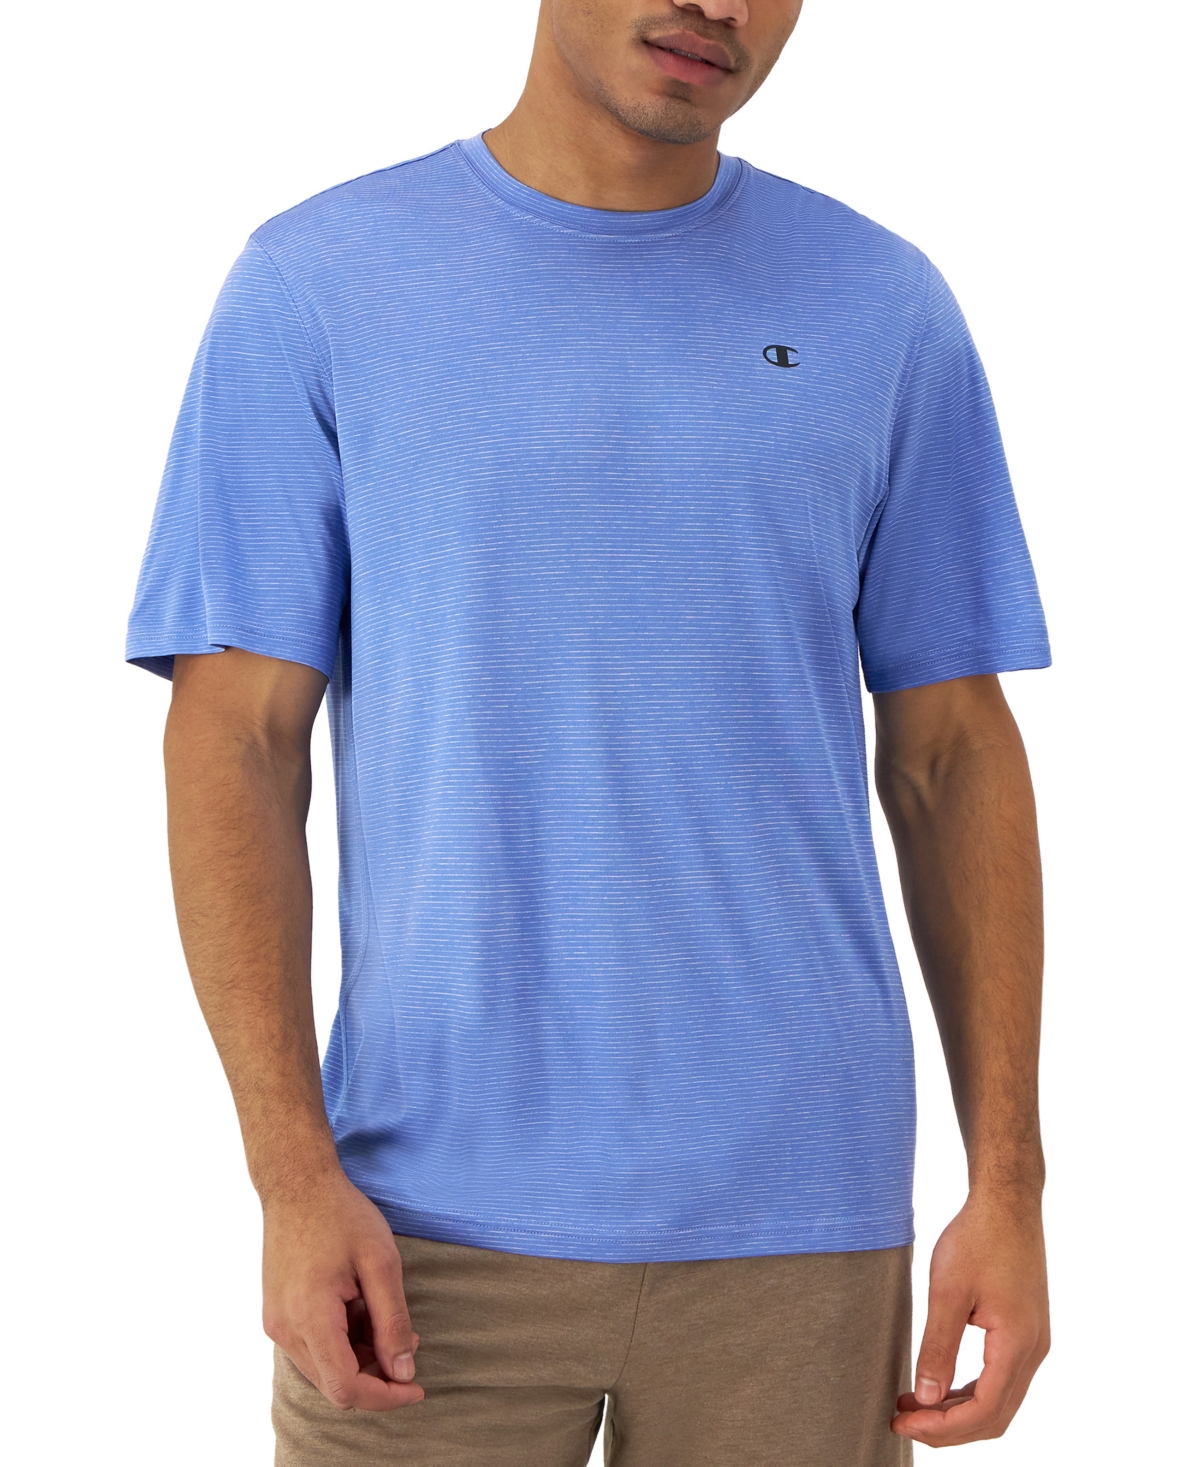 Men's Standard-Fit Stripe Performance T-Shirt - Plaster Blue